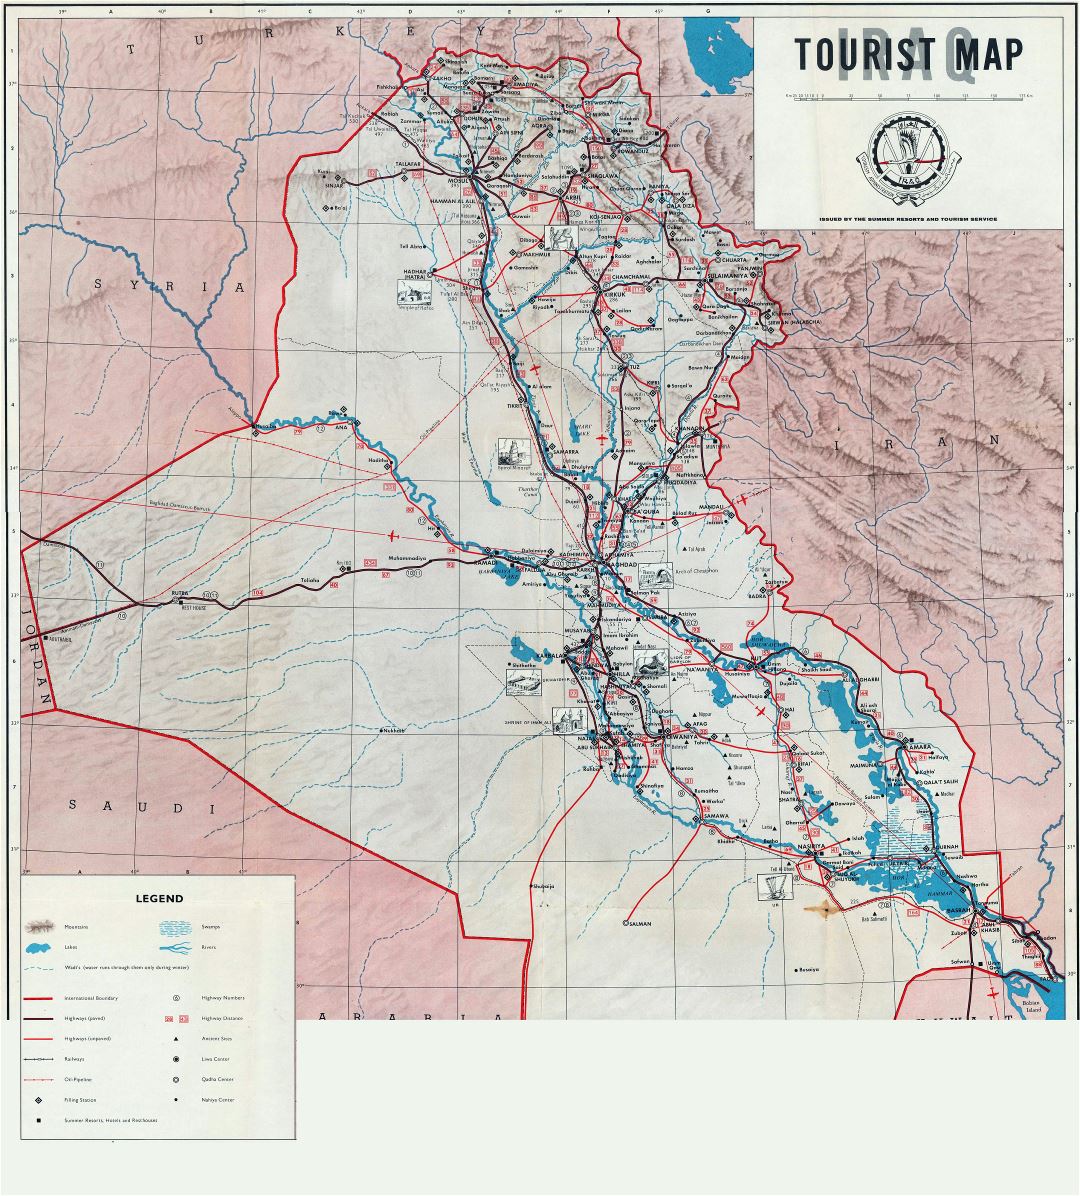 Grande detallado mapa turístico de Iraq - 1970